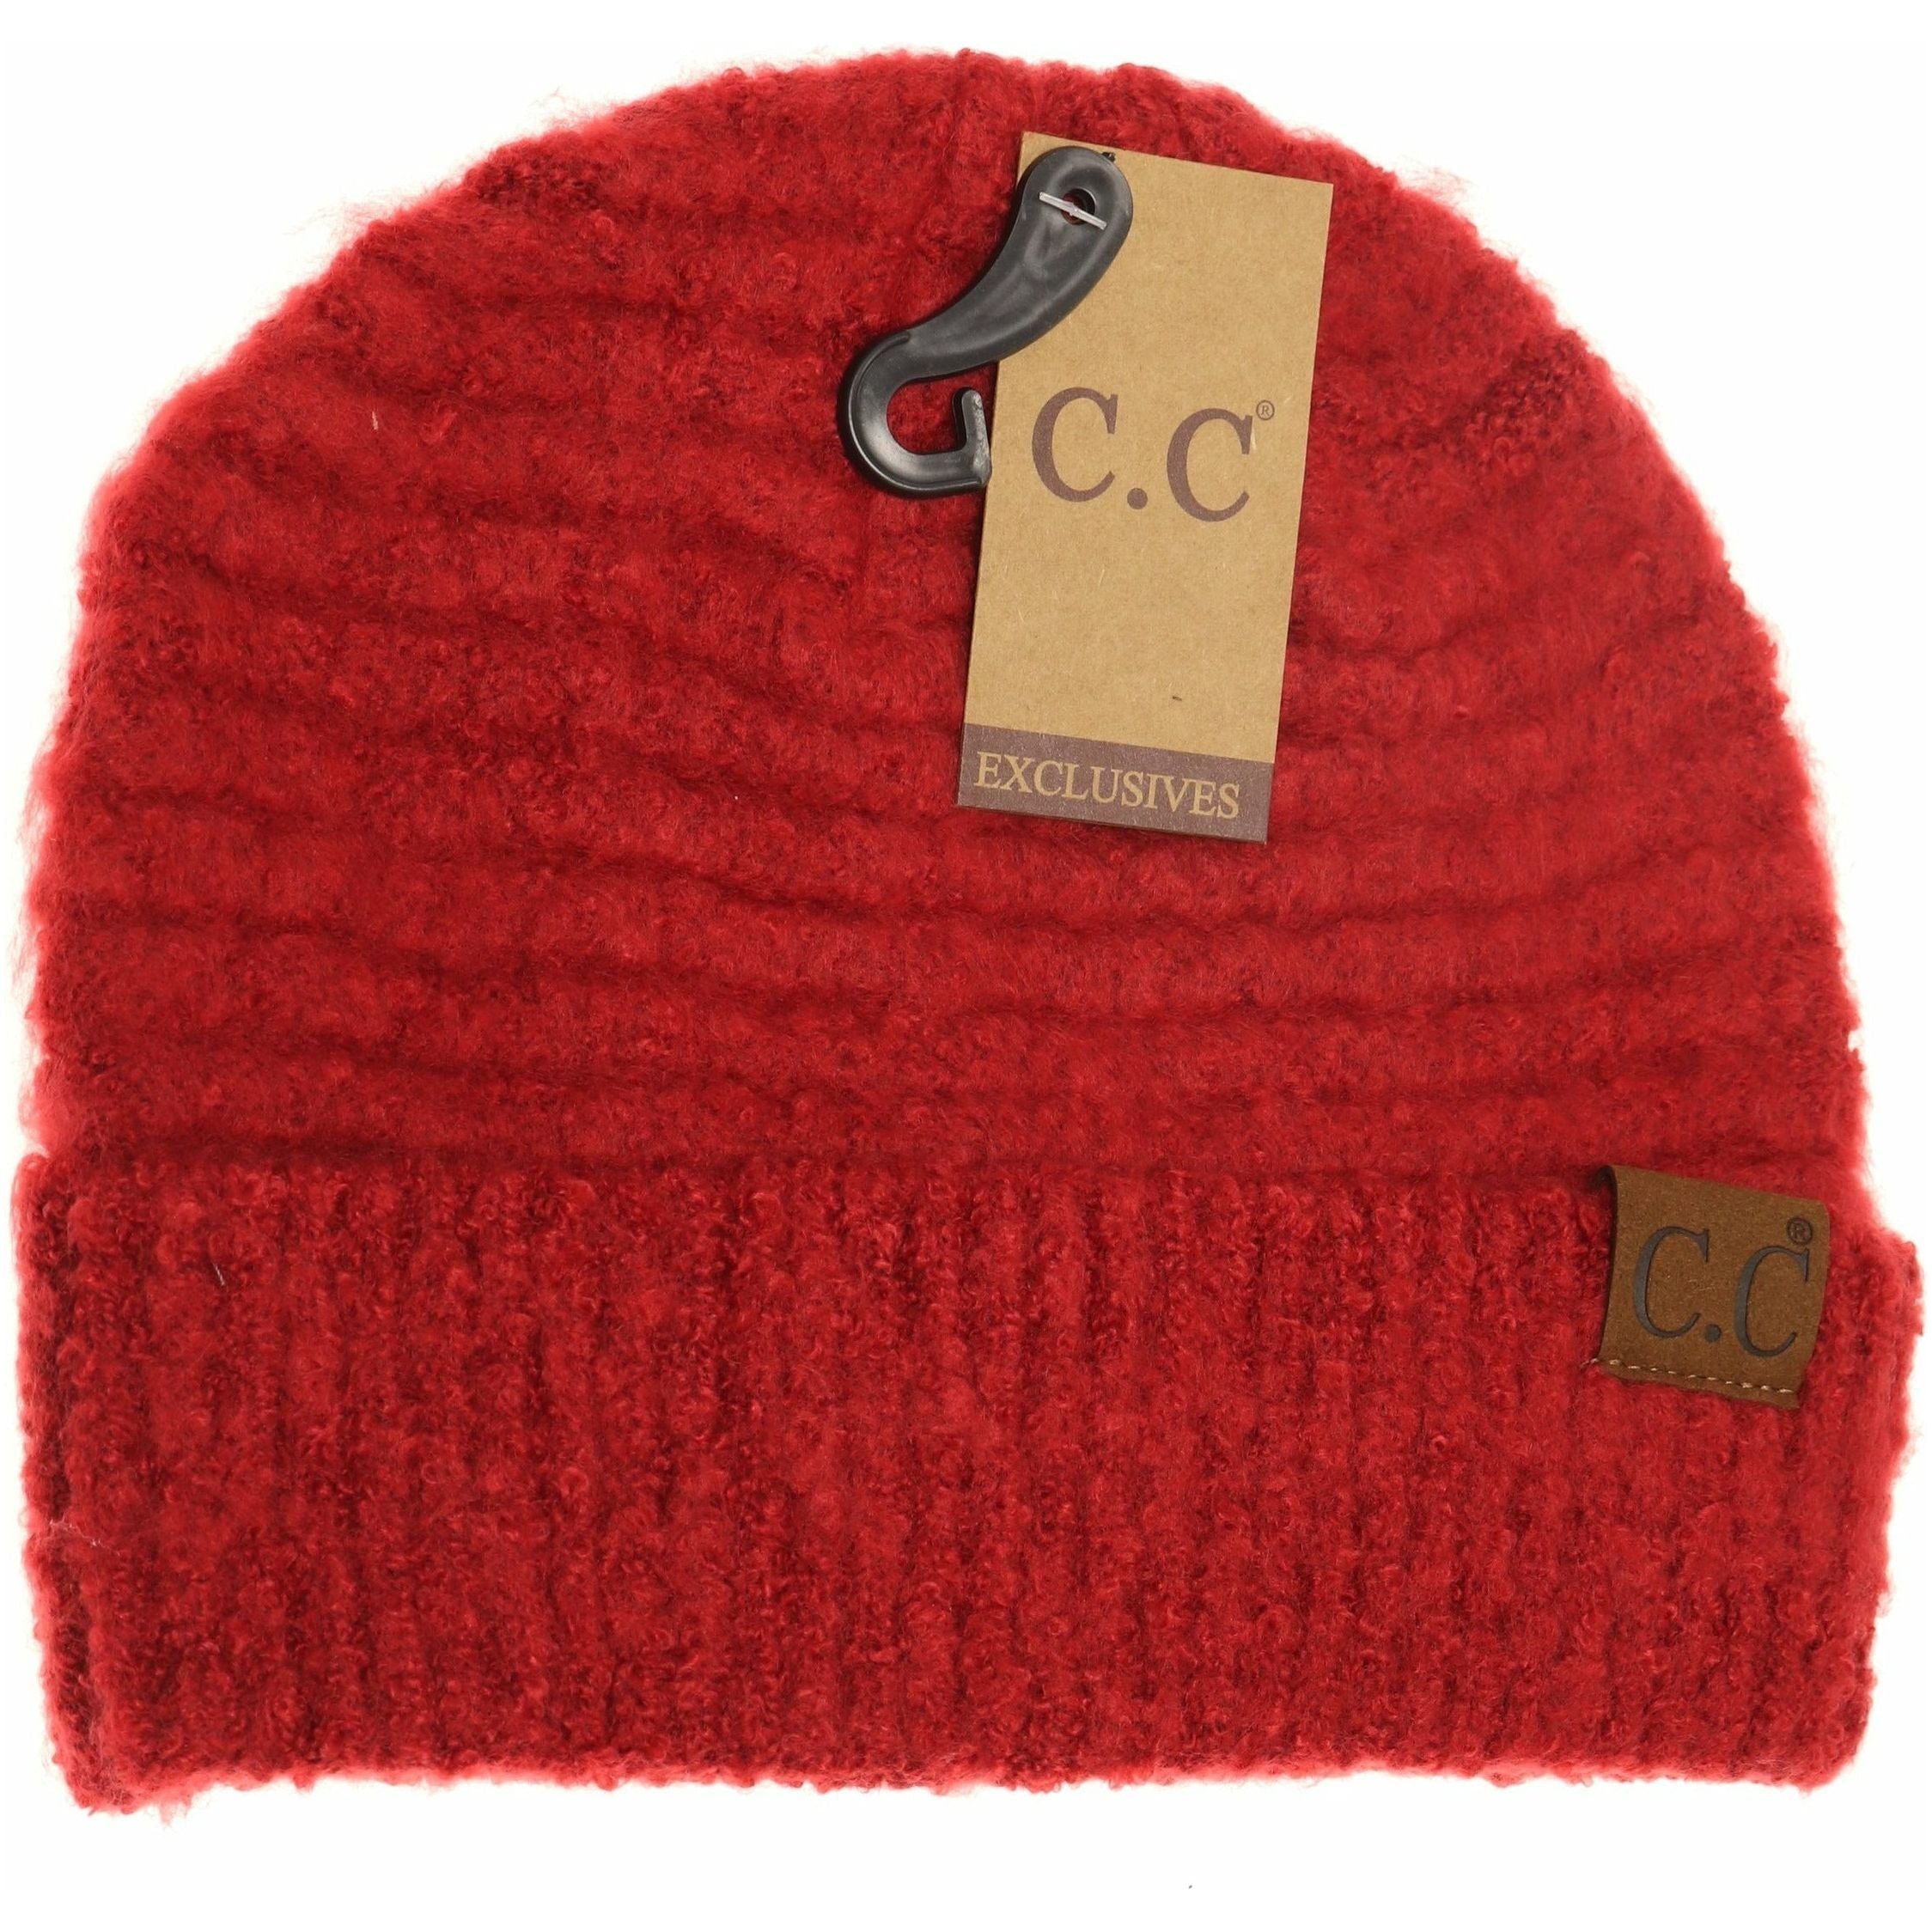 CC HAT Womens Beanie Winter Hat CC Designer Brand Textile Hat Tan Grey Knit  Hat